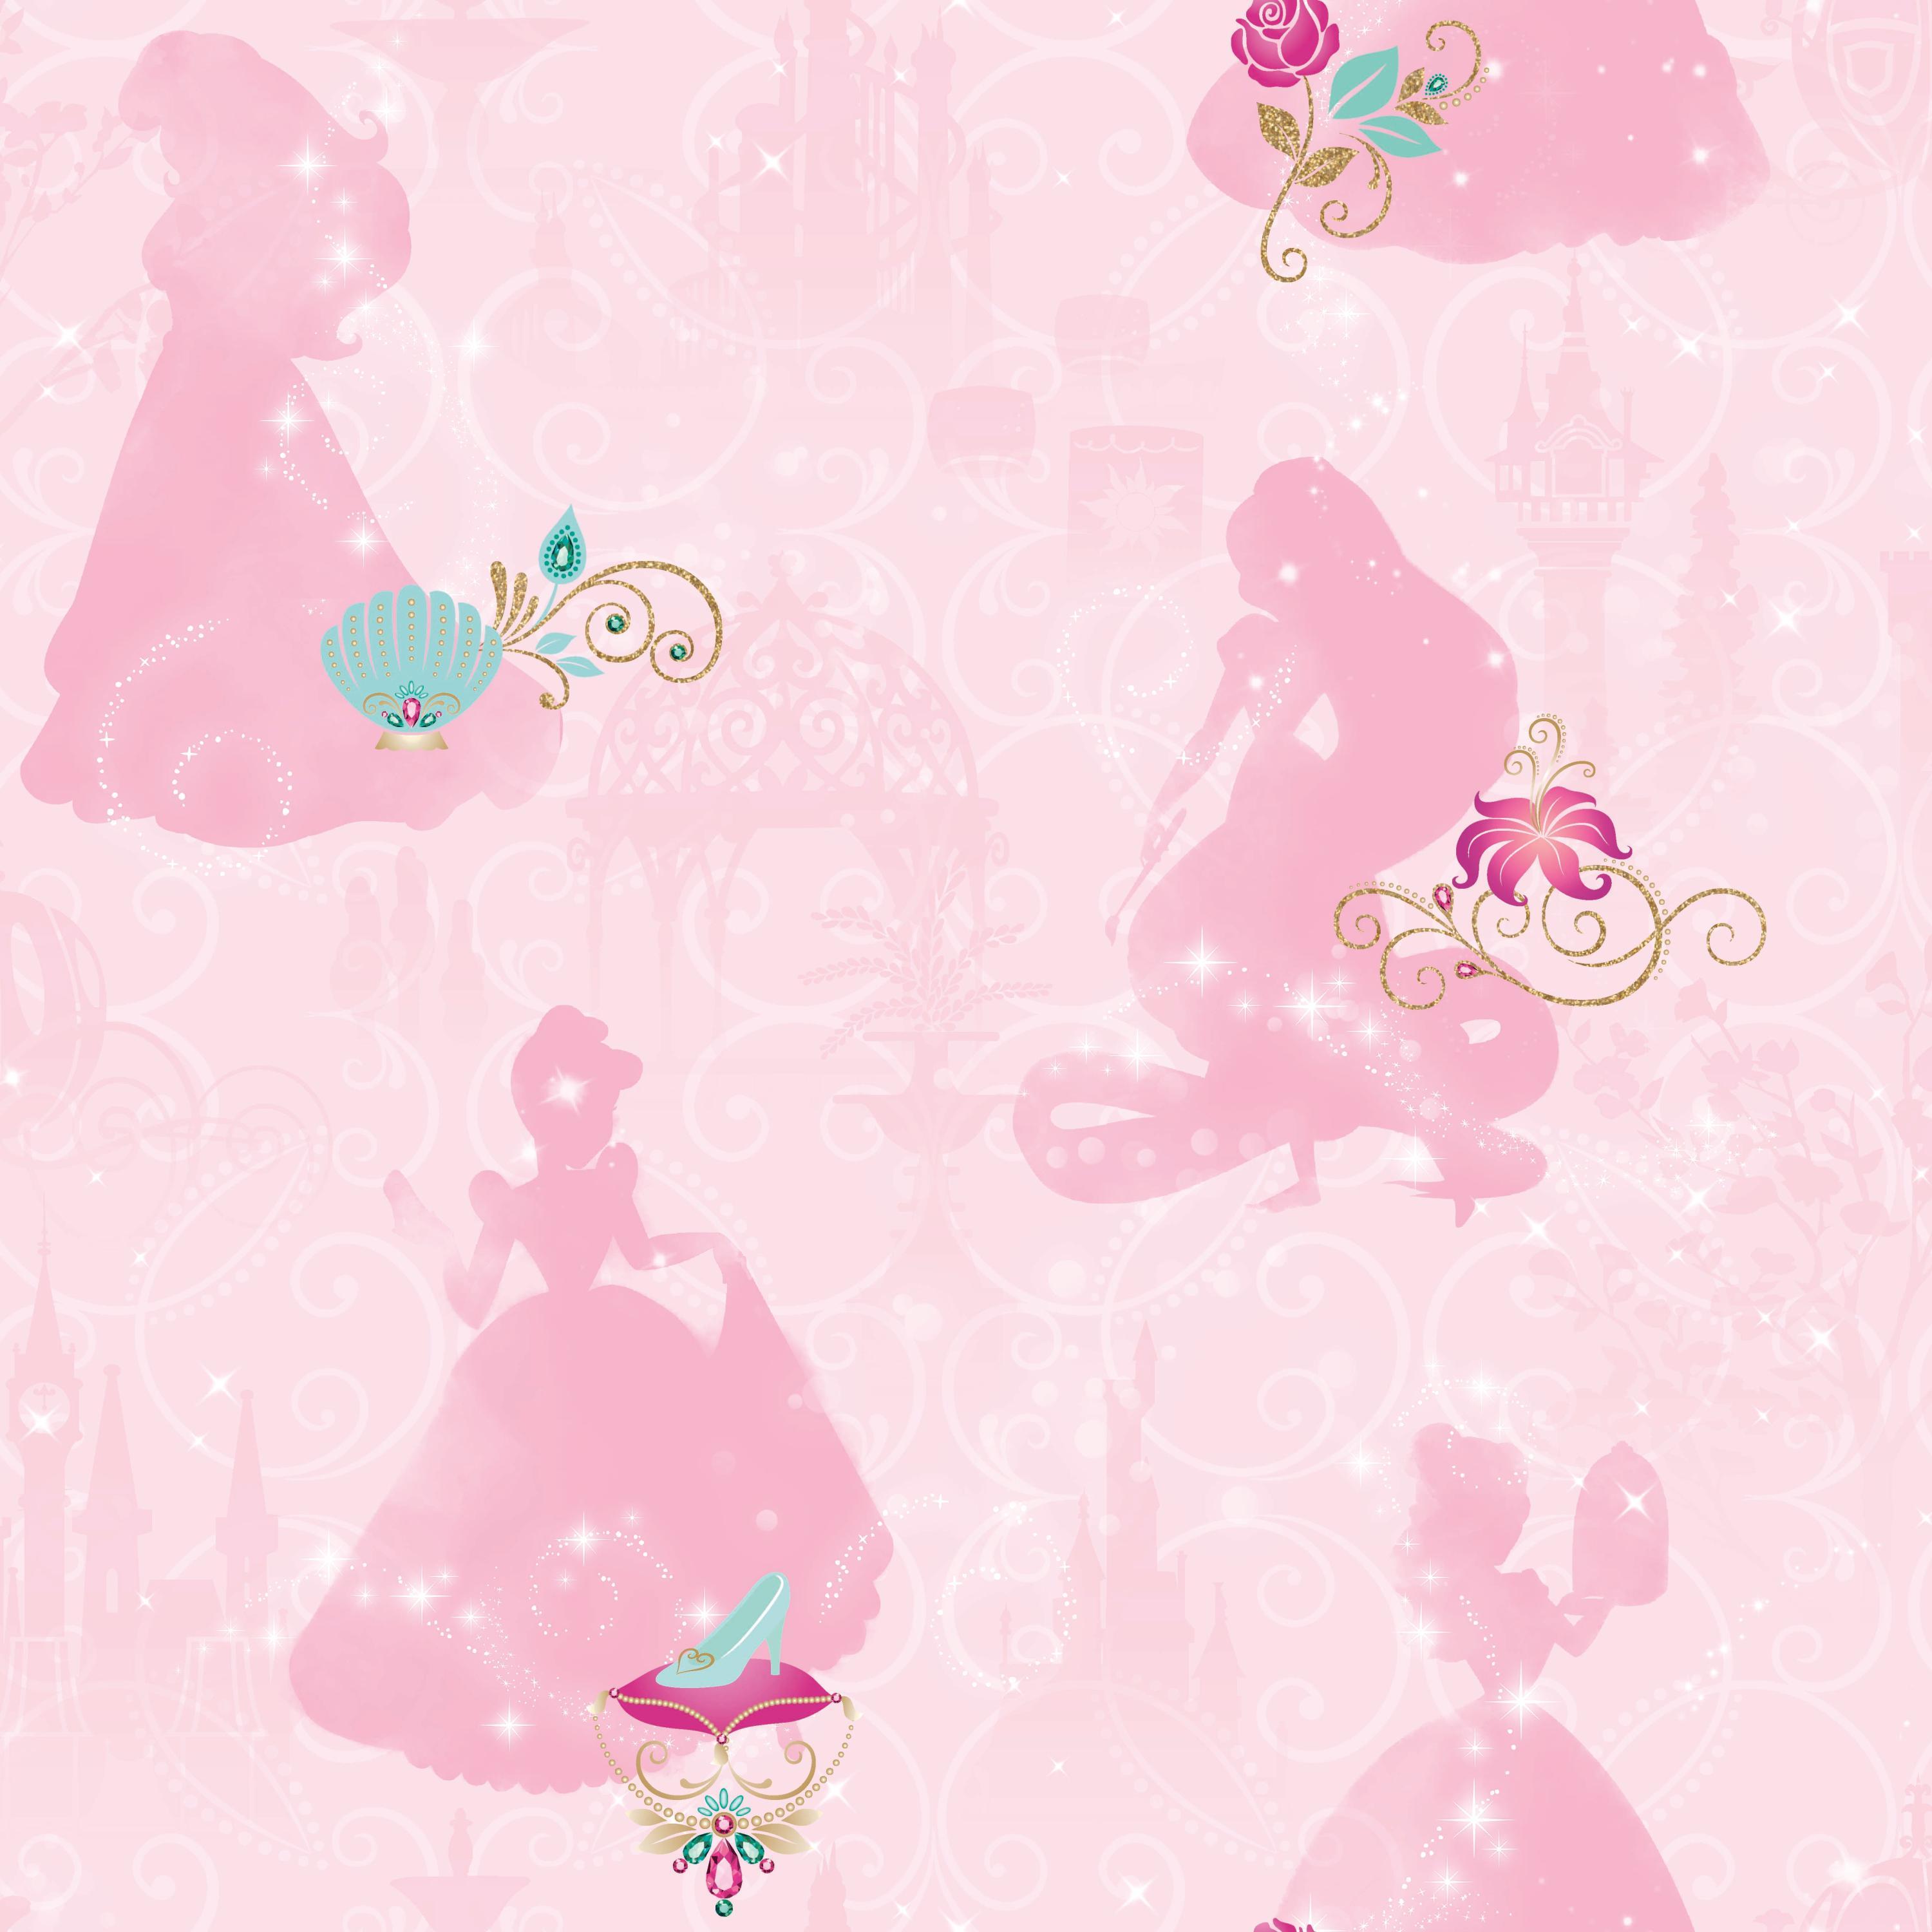 RoomMates Disney Princess Pink Peel and Stick Wallpaper